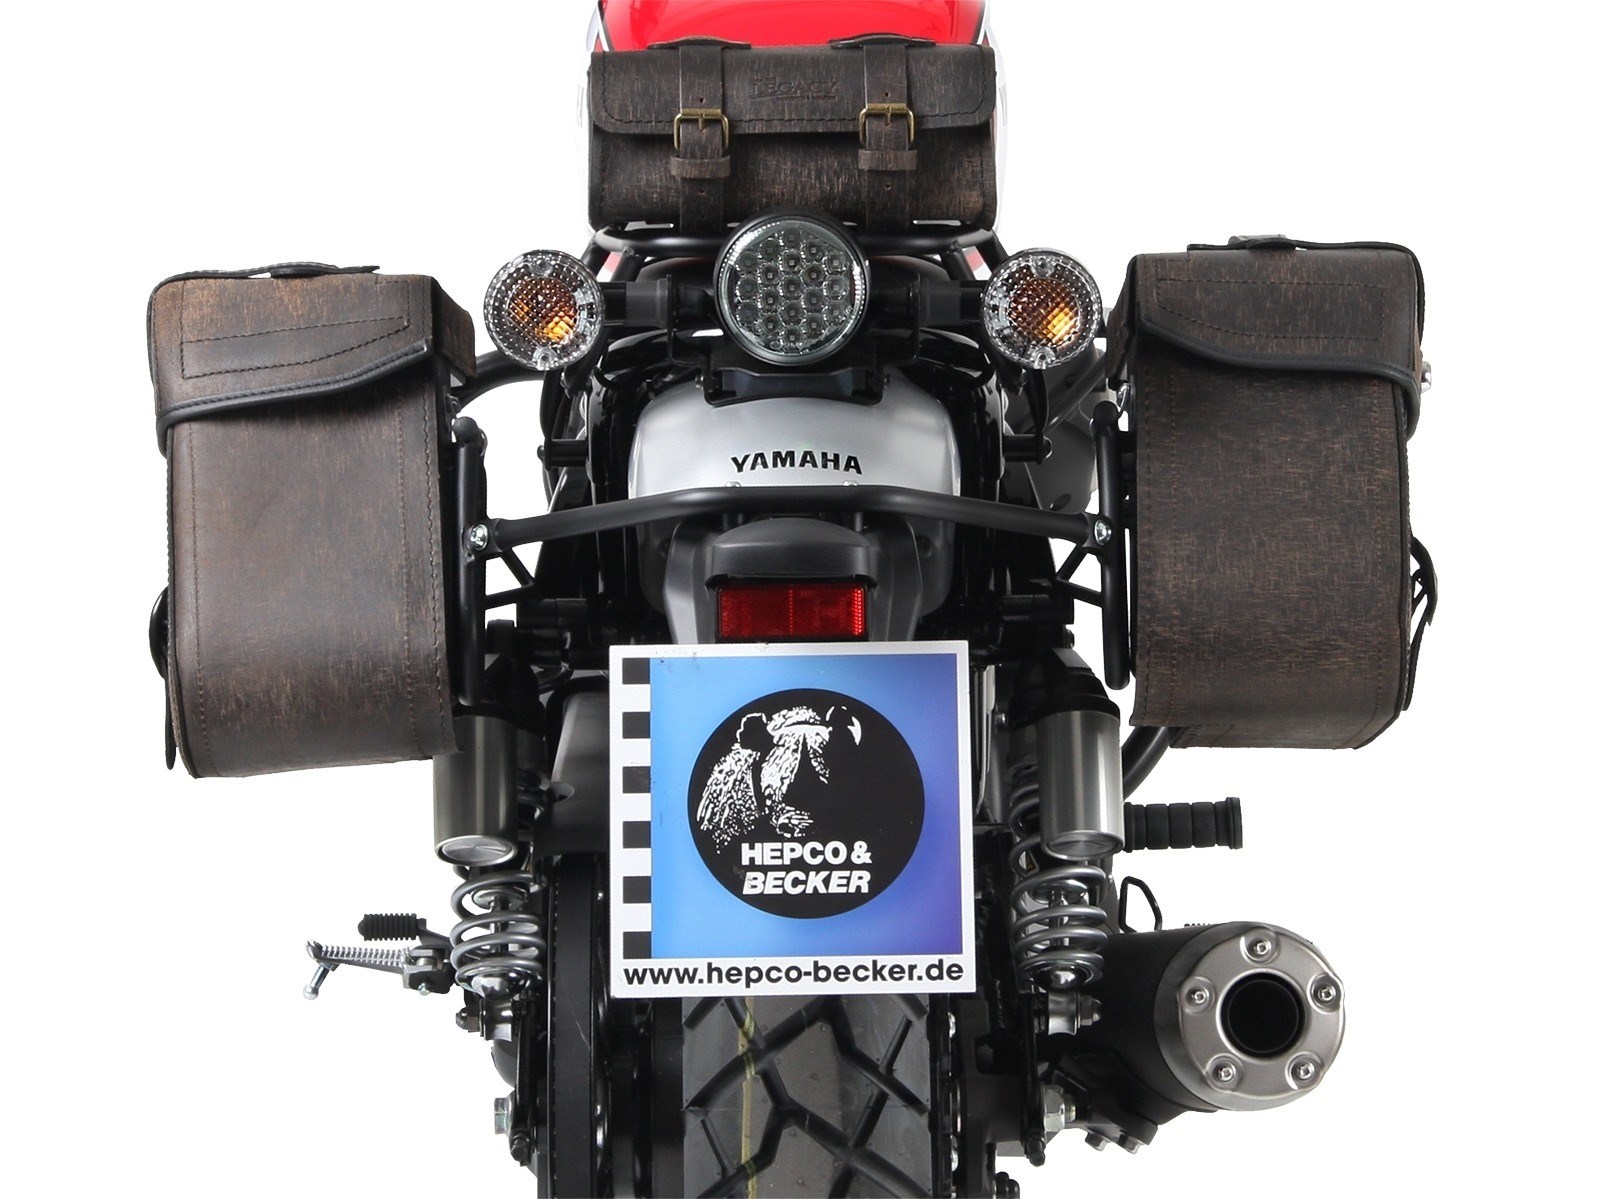 Hepco en Becker bagage drager zijtassen Yamaha SCR950 rugged cutout